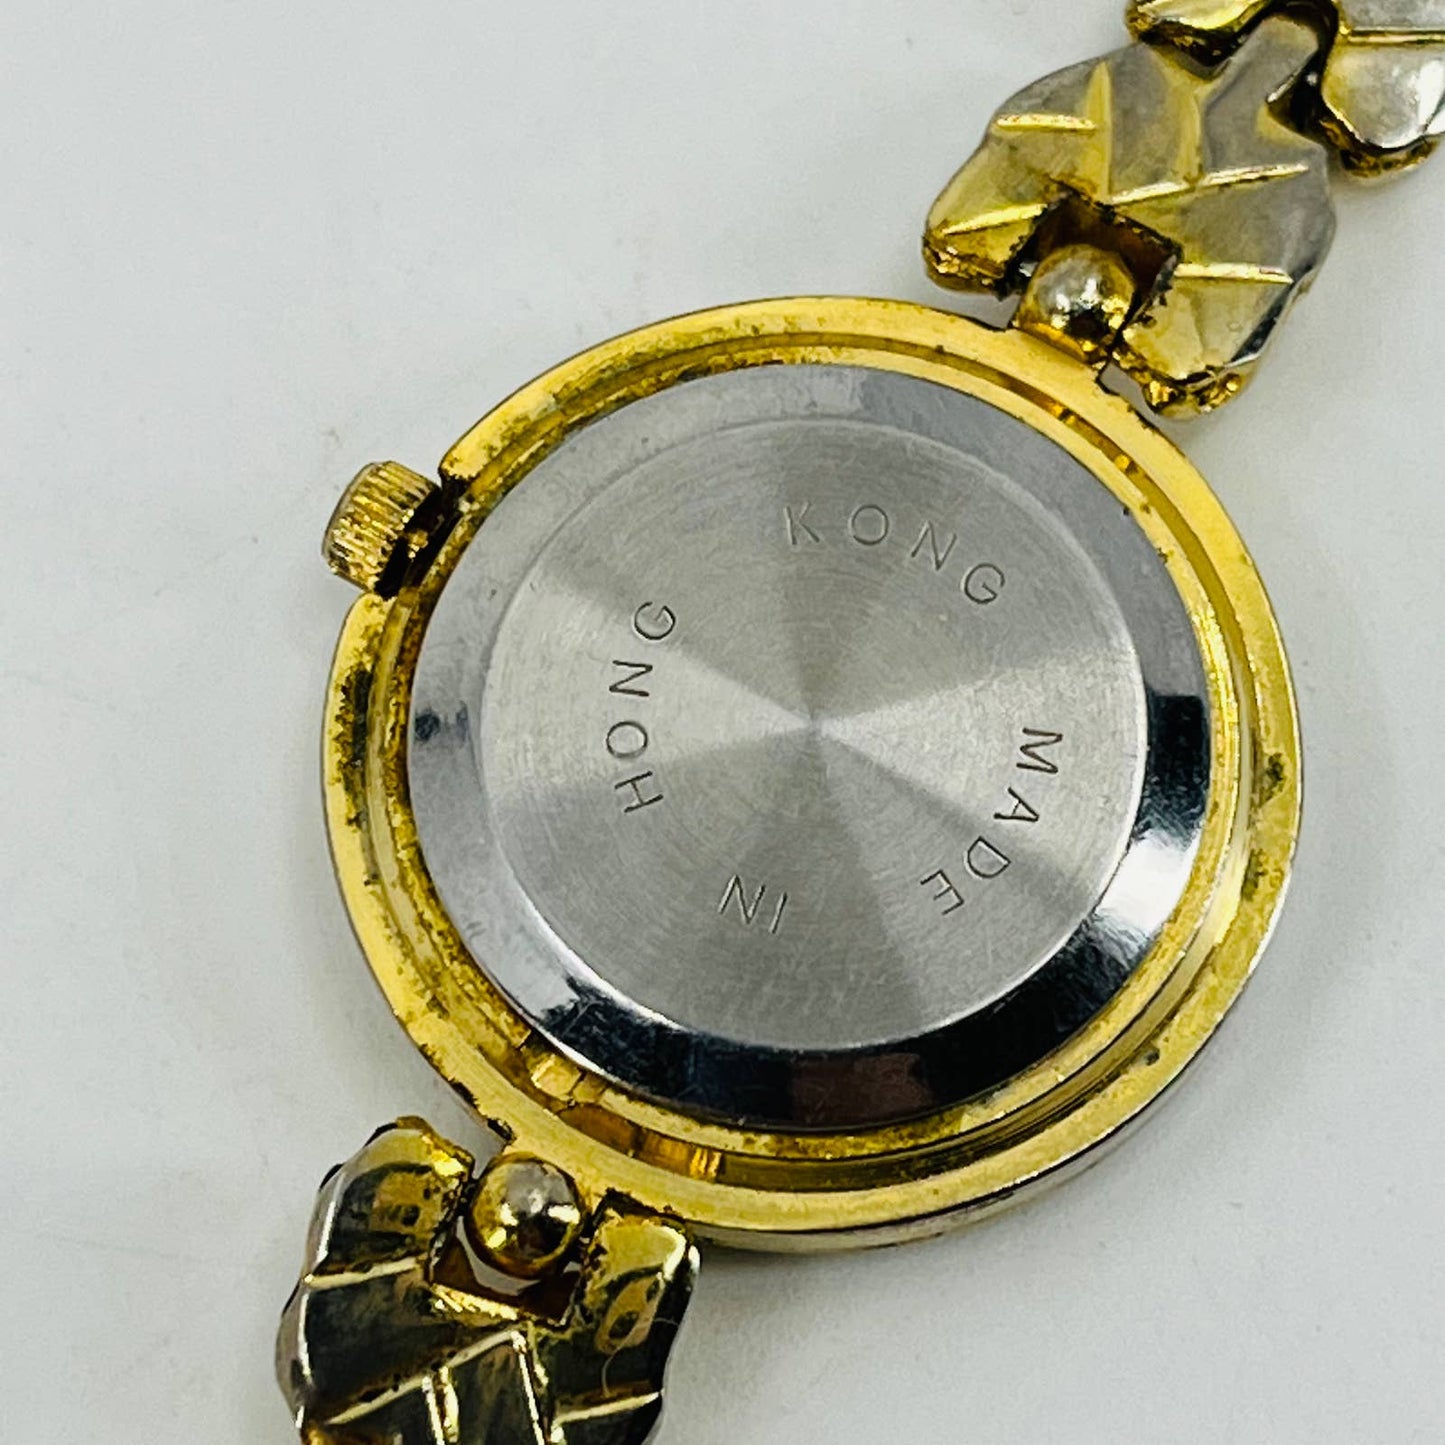 Vintage Gold & Silver Tone Quartz Watch Metal Bracelet Clasp Band SA9